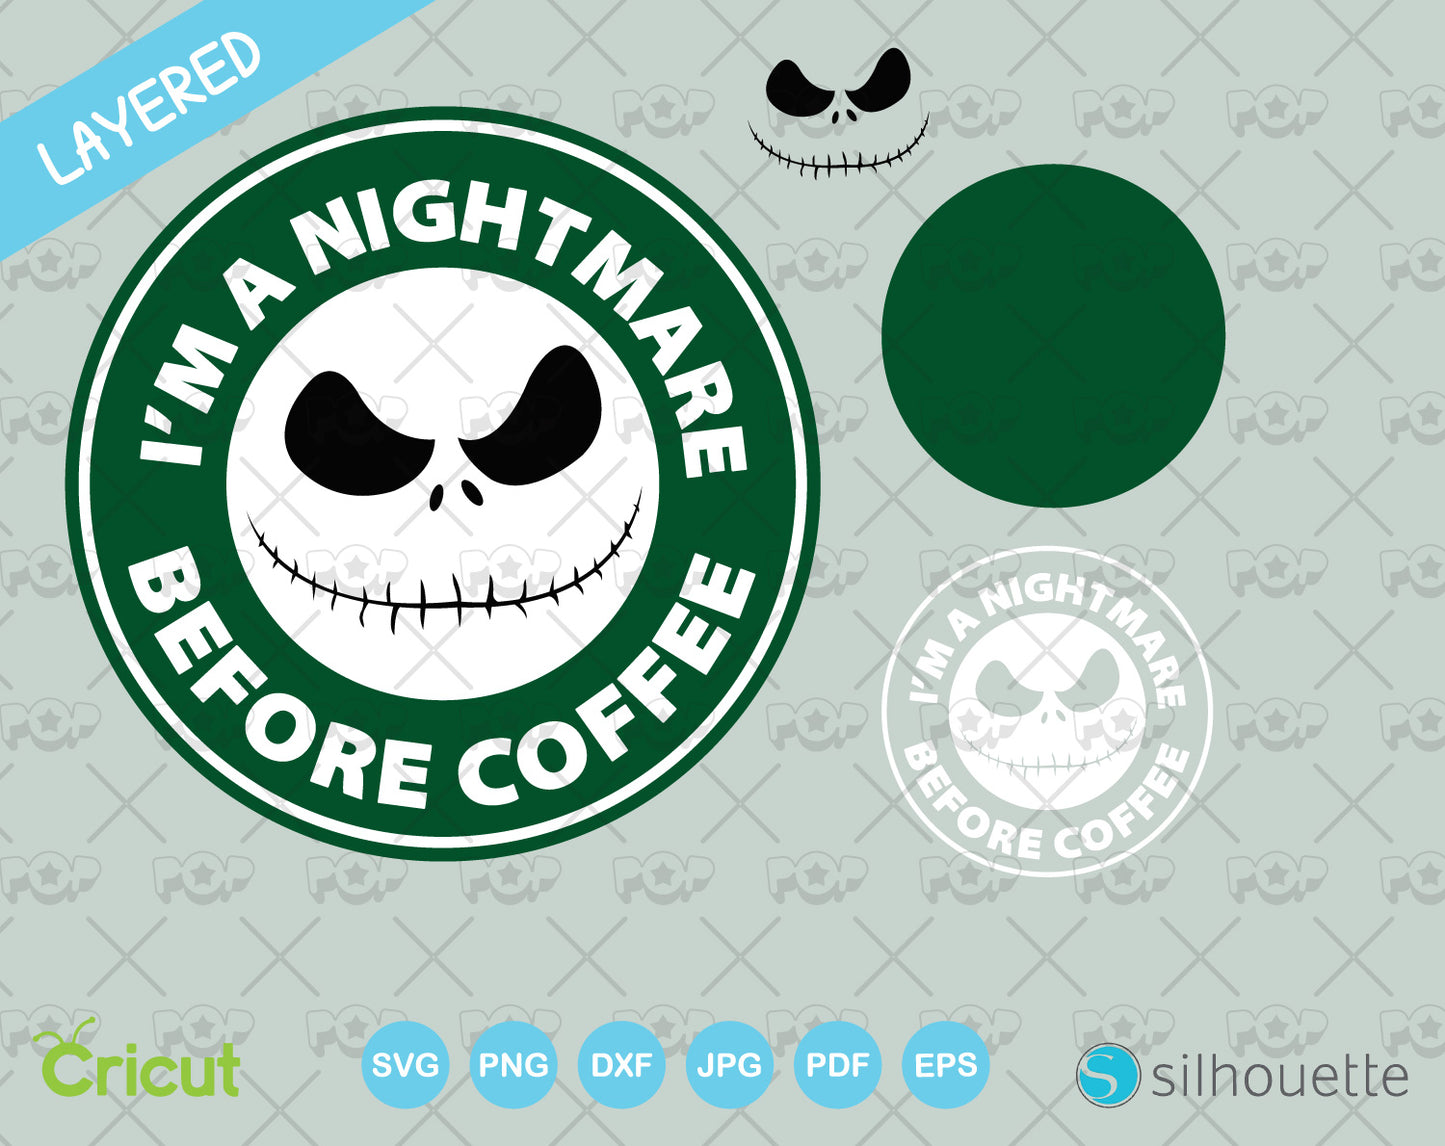 Starbucks Jack Skellington clipart, Jack Skellington Coffee clipart, SVG cut files for cricut silhouette, SVG, PNG, DXF, instant download